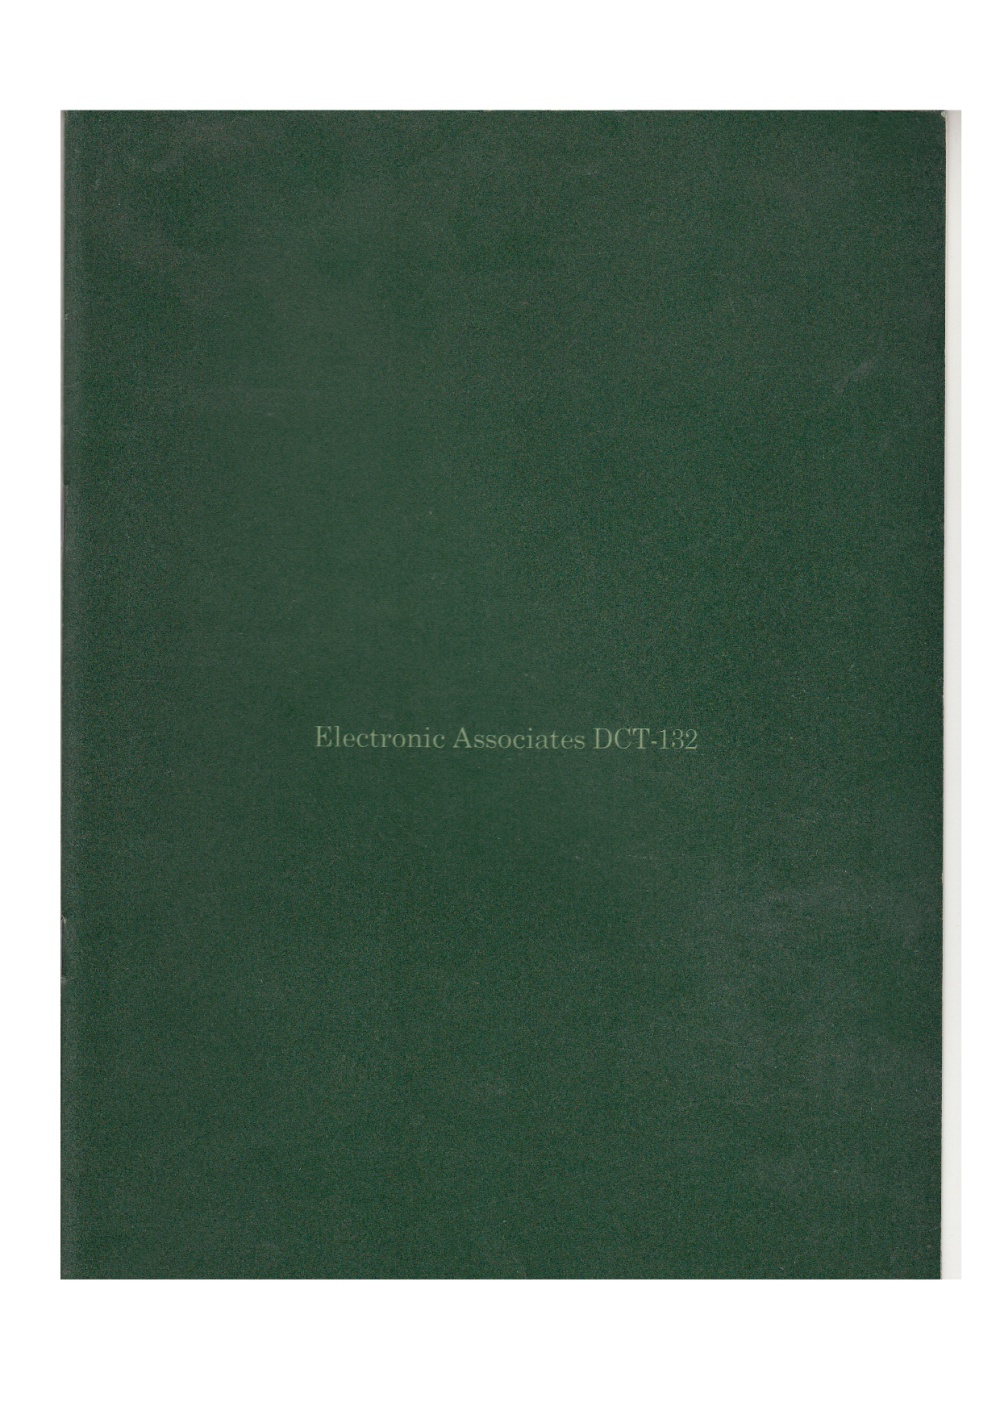 Scan of Document: Electronic Associates DCT-132 Brochure